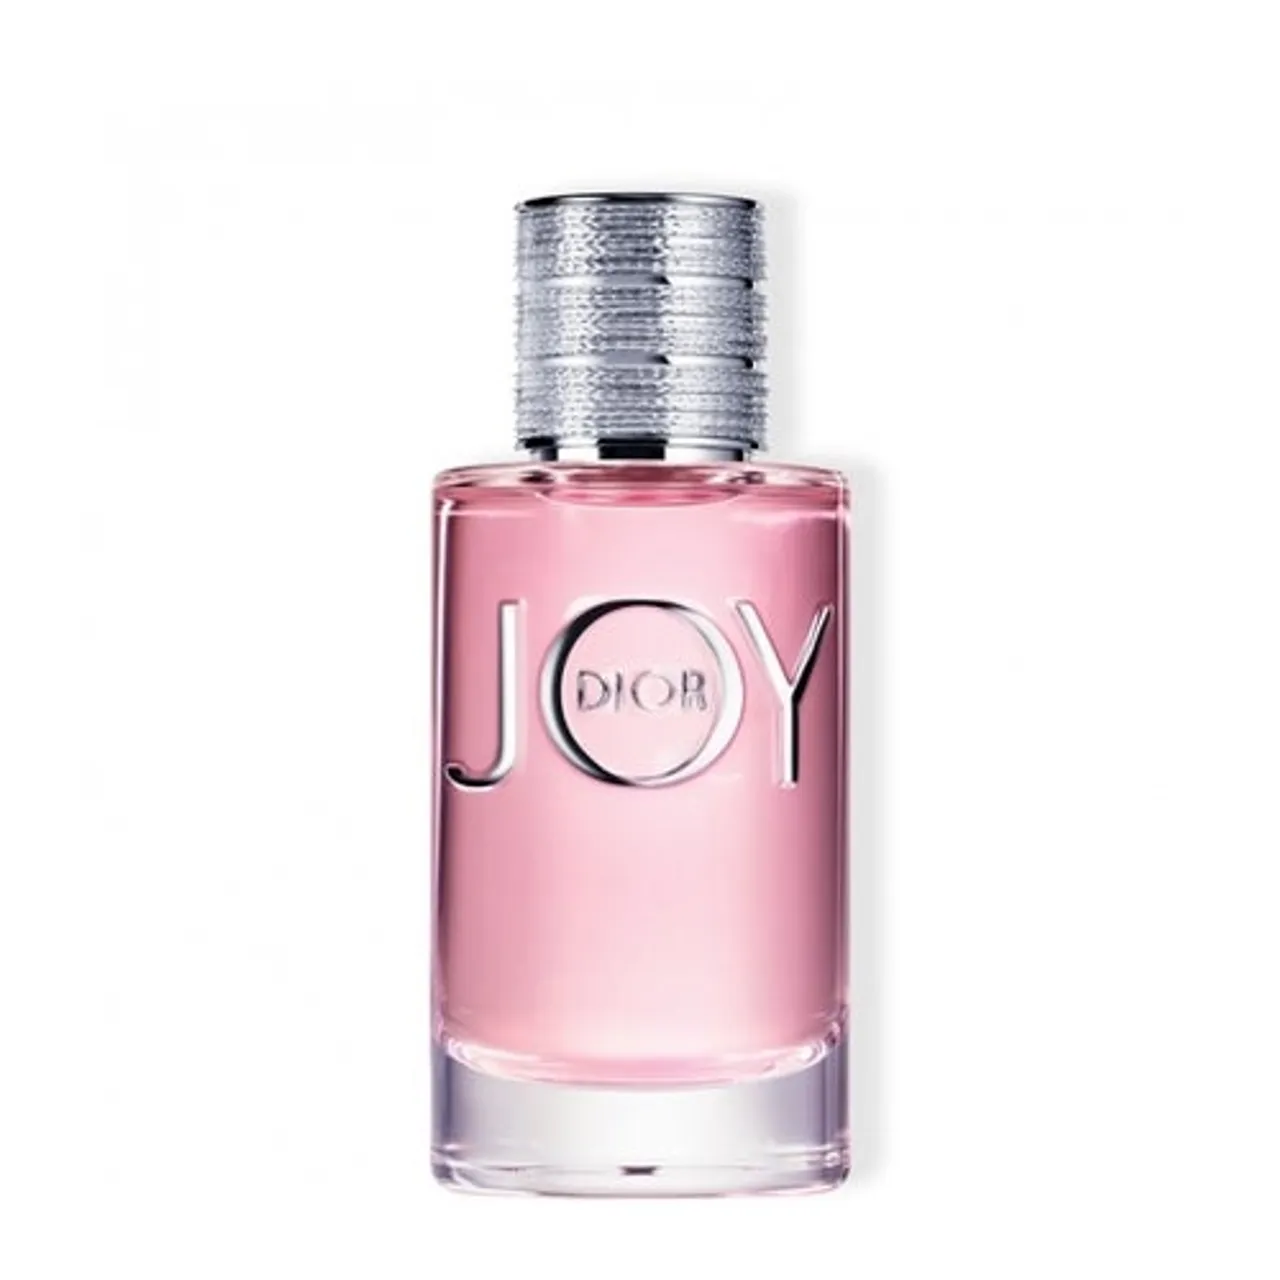 Dior Joy by Dior Eau de Parfum 90 ml